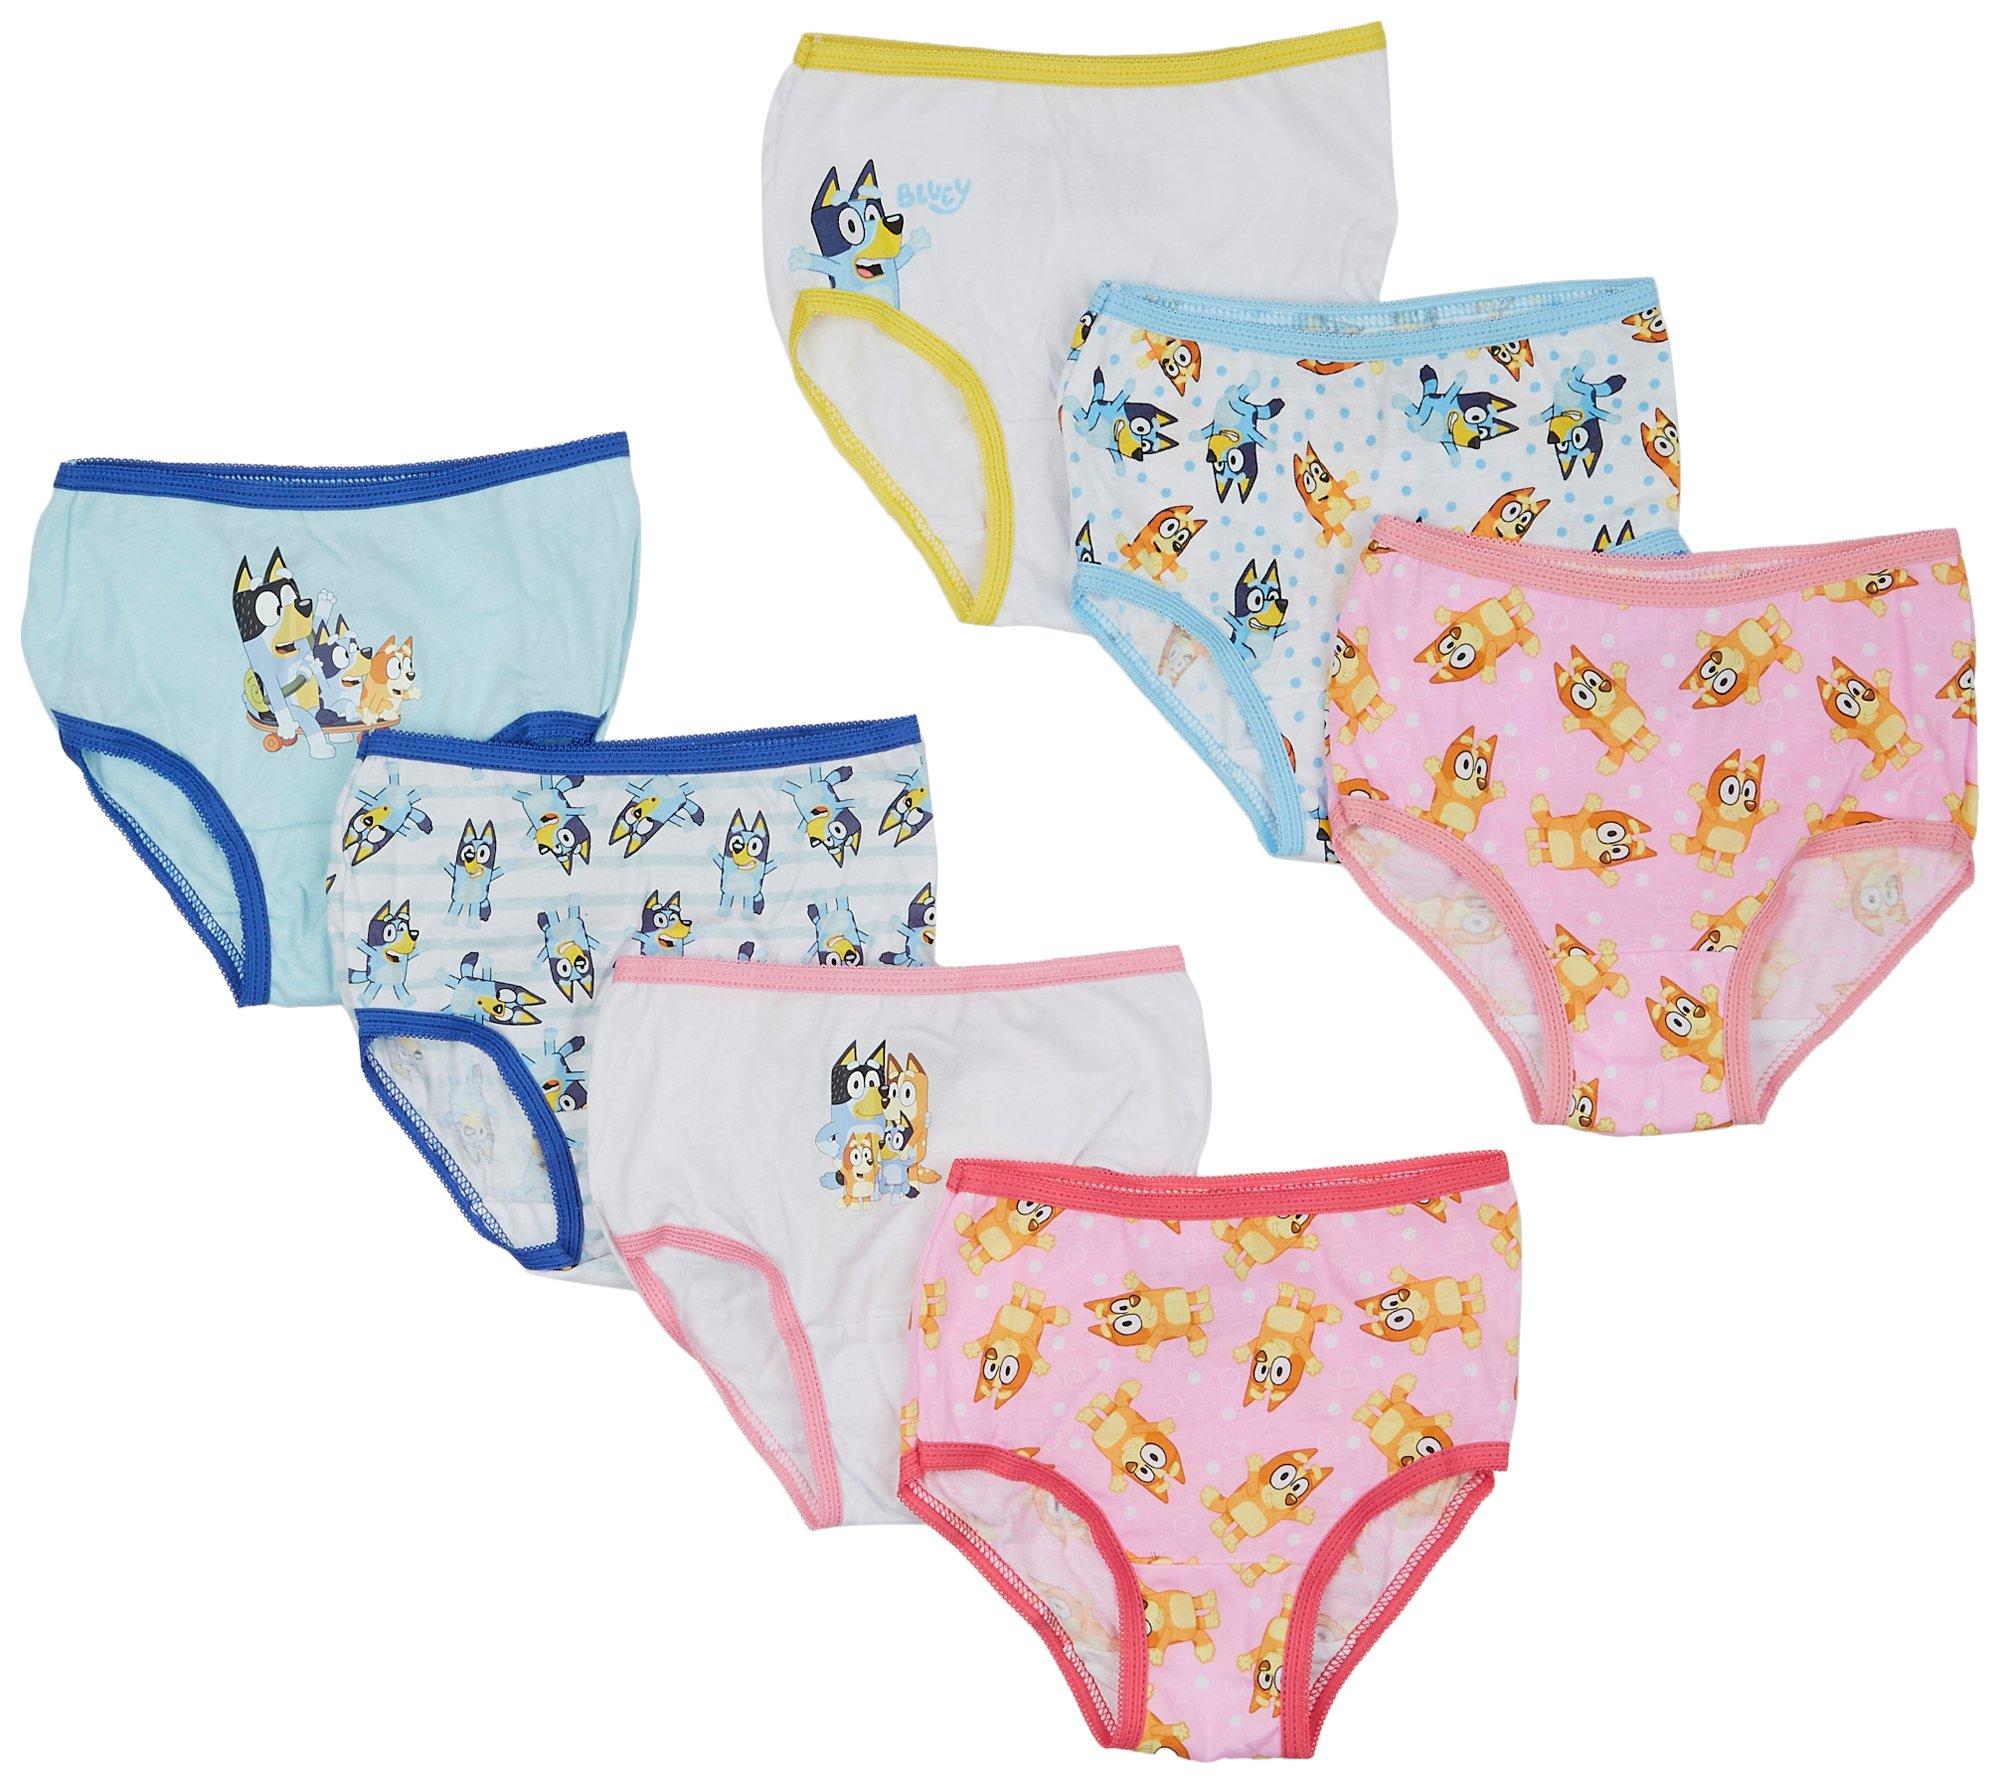  Disney Little Girls' Princess 7 Piece Underwear Panties Set (4)  Multi : Clothing, Shoes & Jewelry